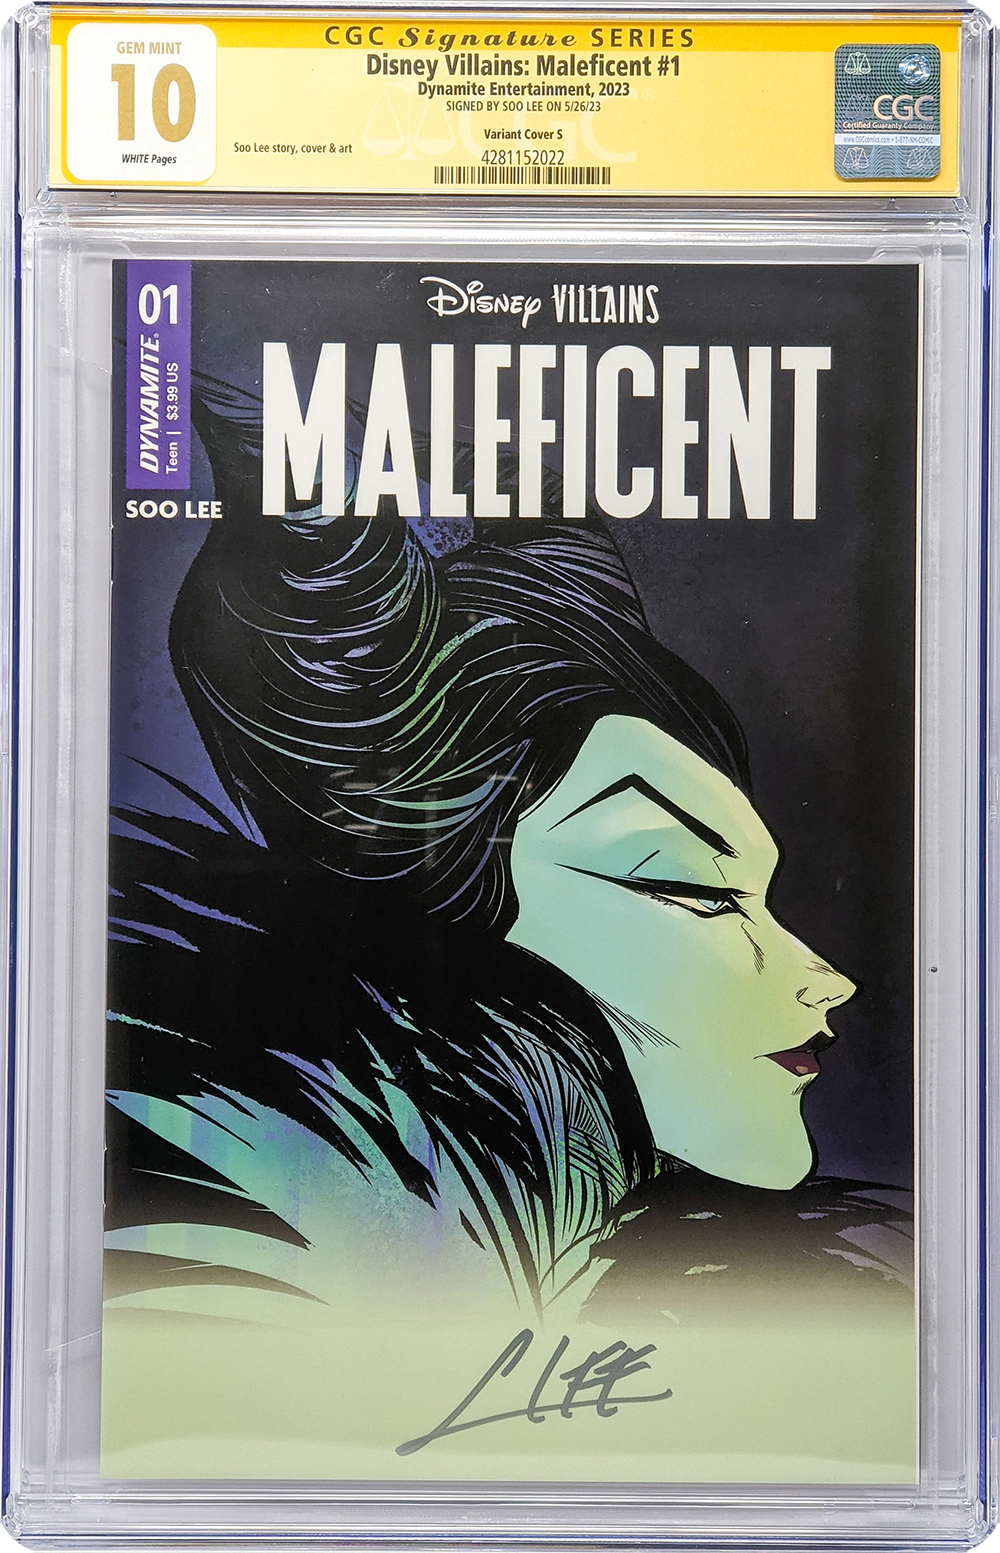 Disney Villains Maleficent #1 Soo Lee Variant 1:250 Cover S CGC Signature Series 10 Gem Mint